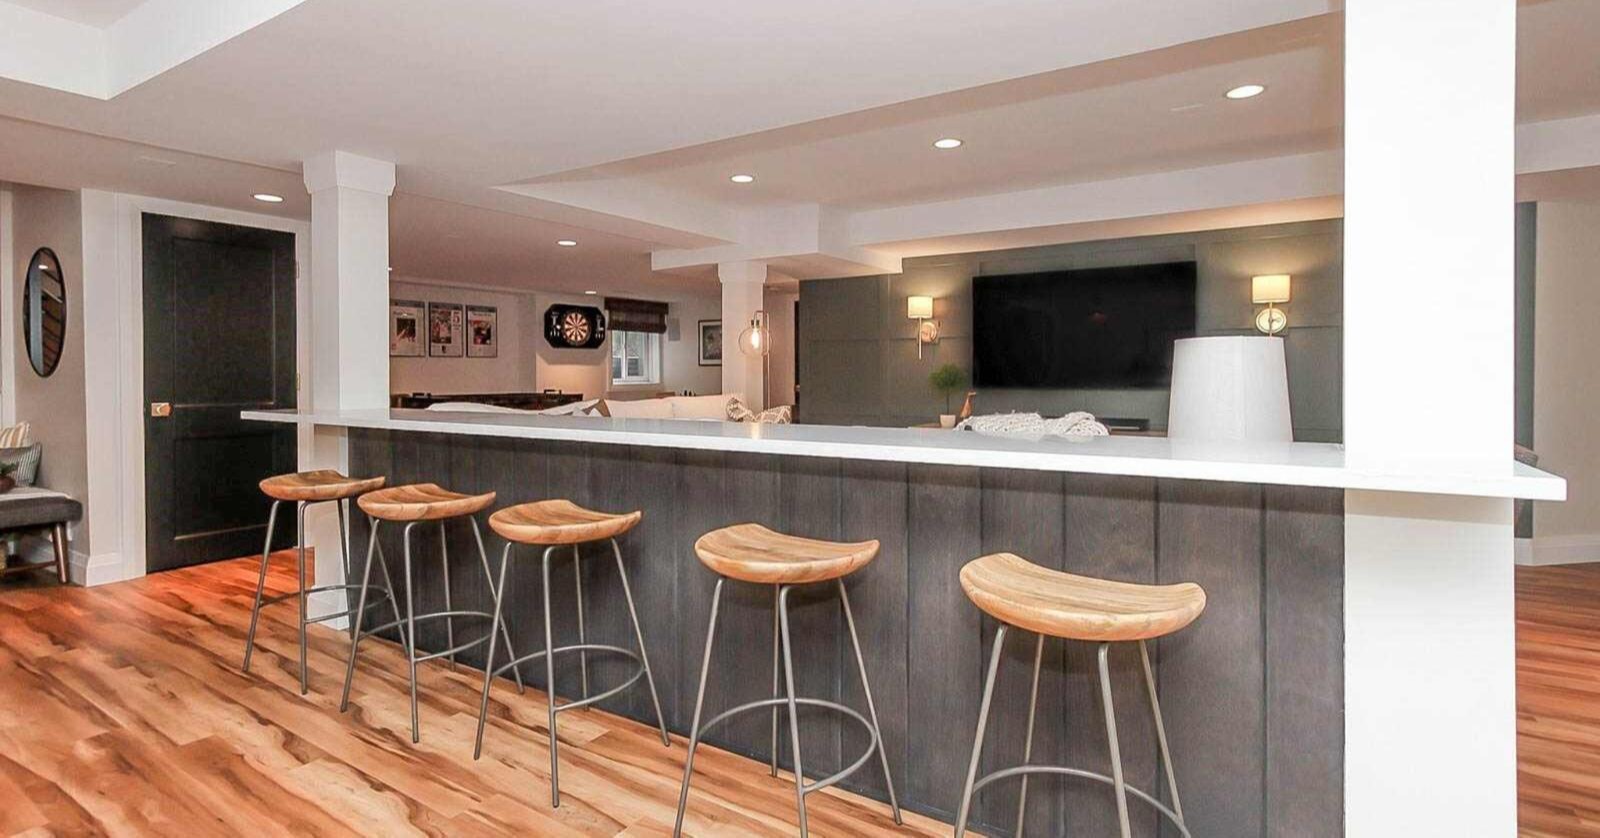 basement bar area with bar stools